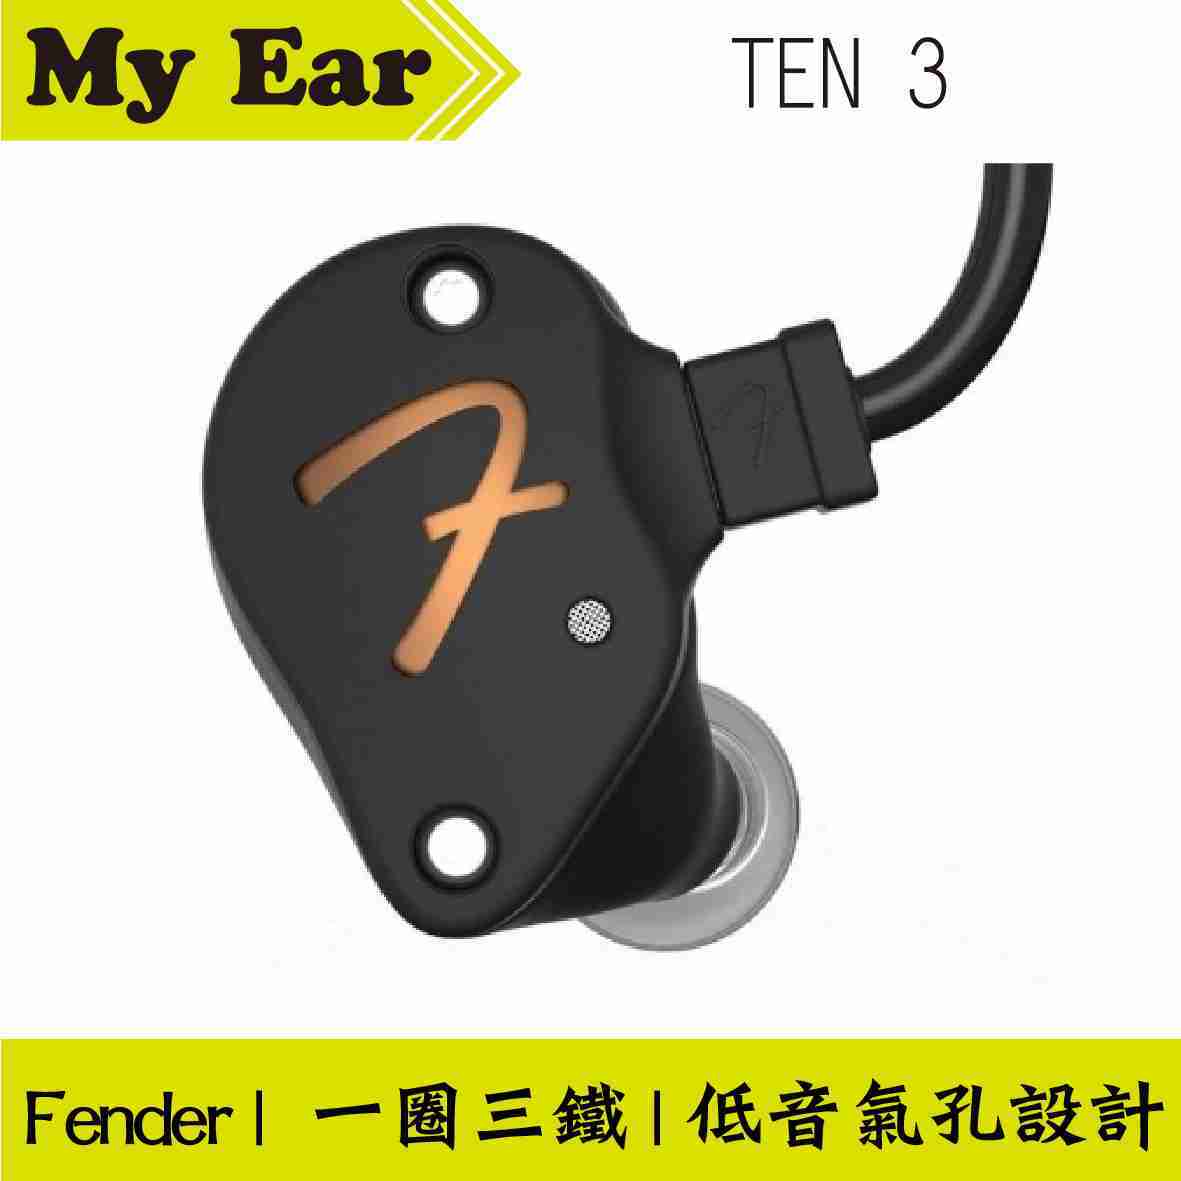 Fender TEN 3 黑色 一圈三鐵 耳道式 耳機 | My Ear耳機專門店